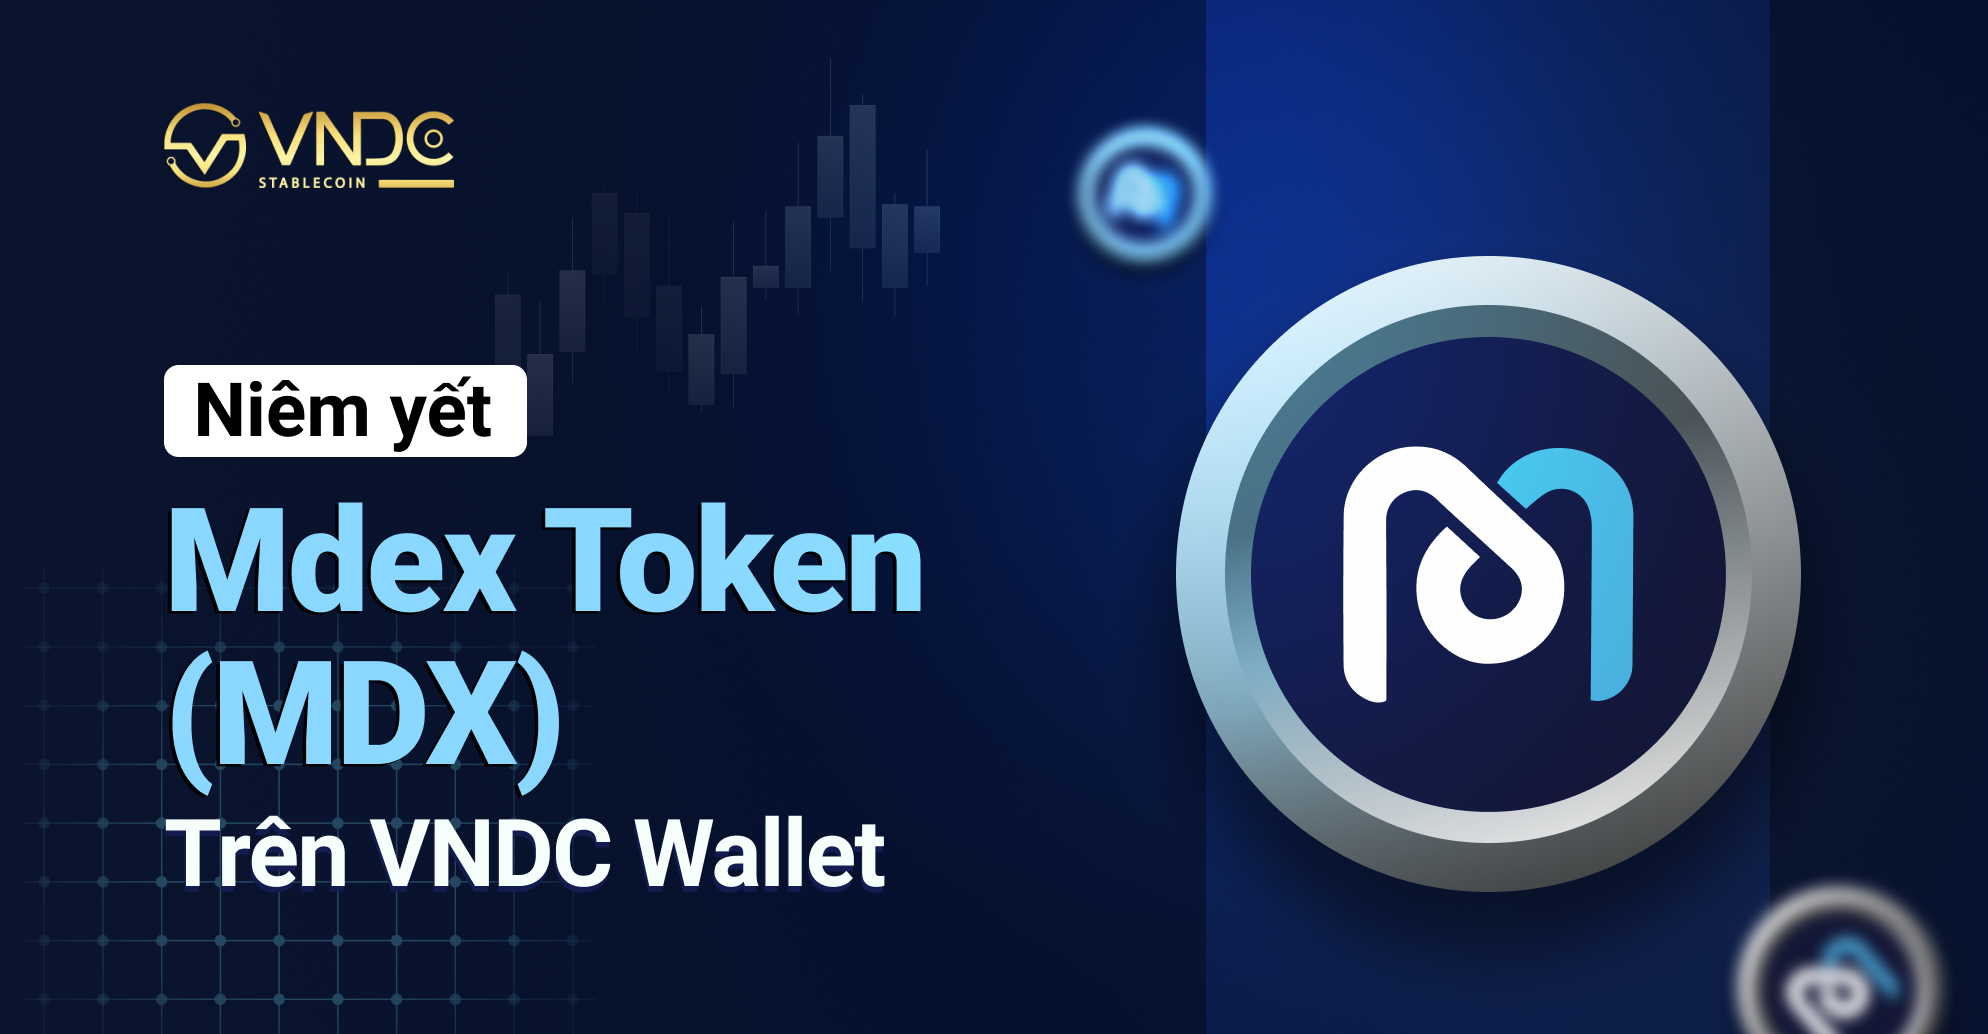 Niêm yết Mdex Token (MDX) trên VNDC Wallet